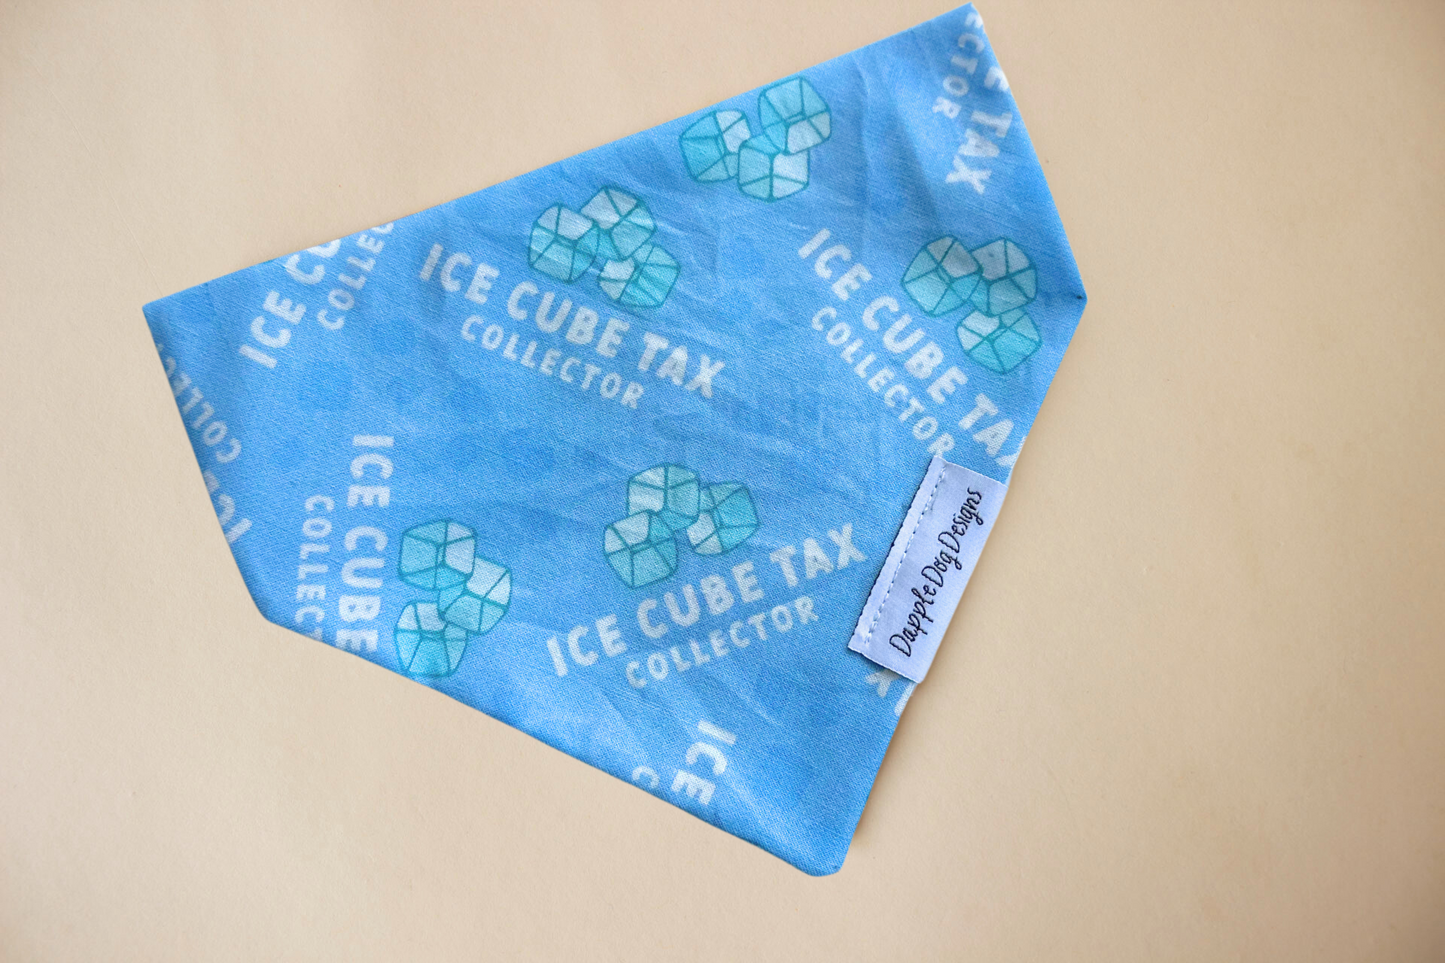 Ice Cube Tax Collector Bandana